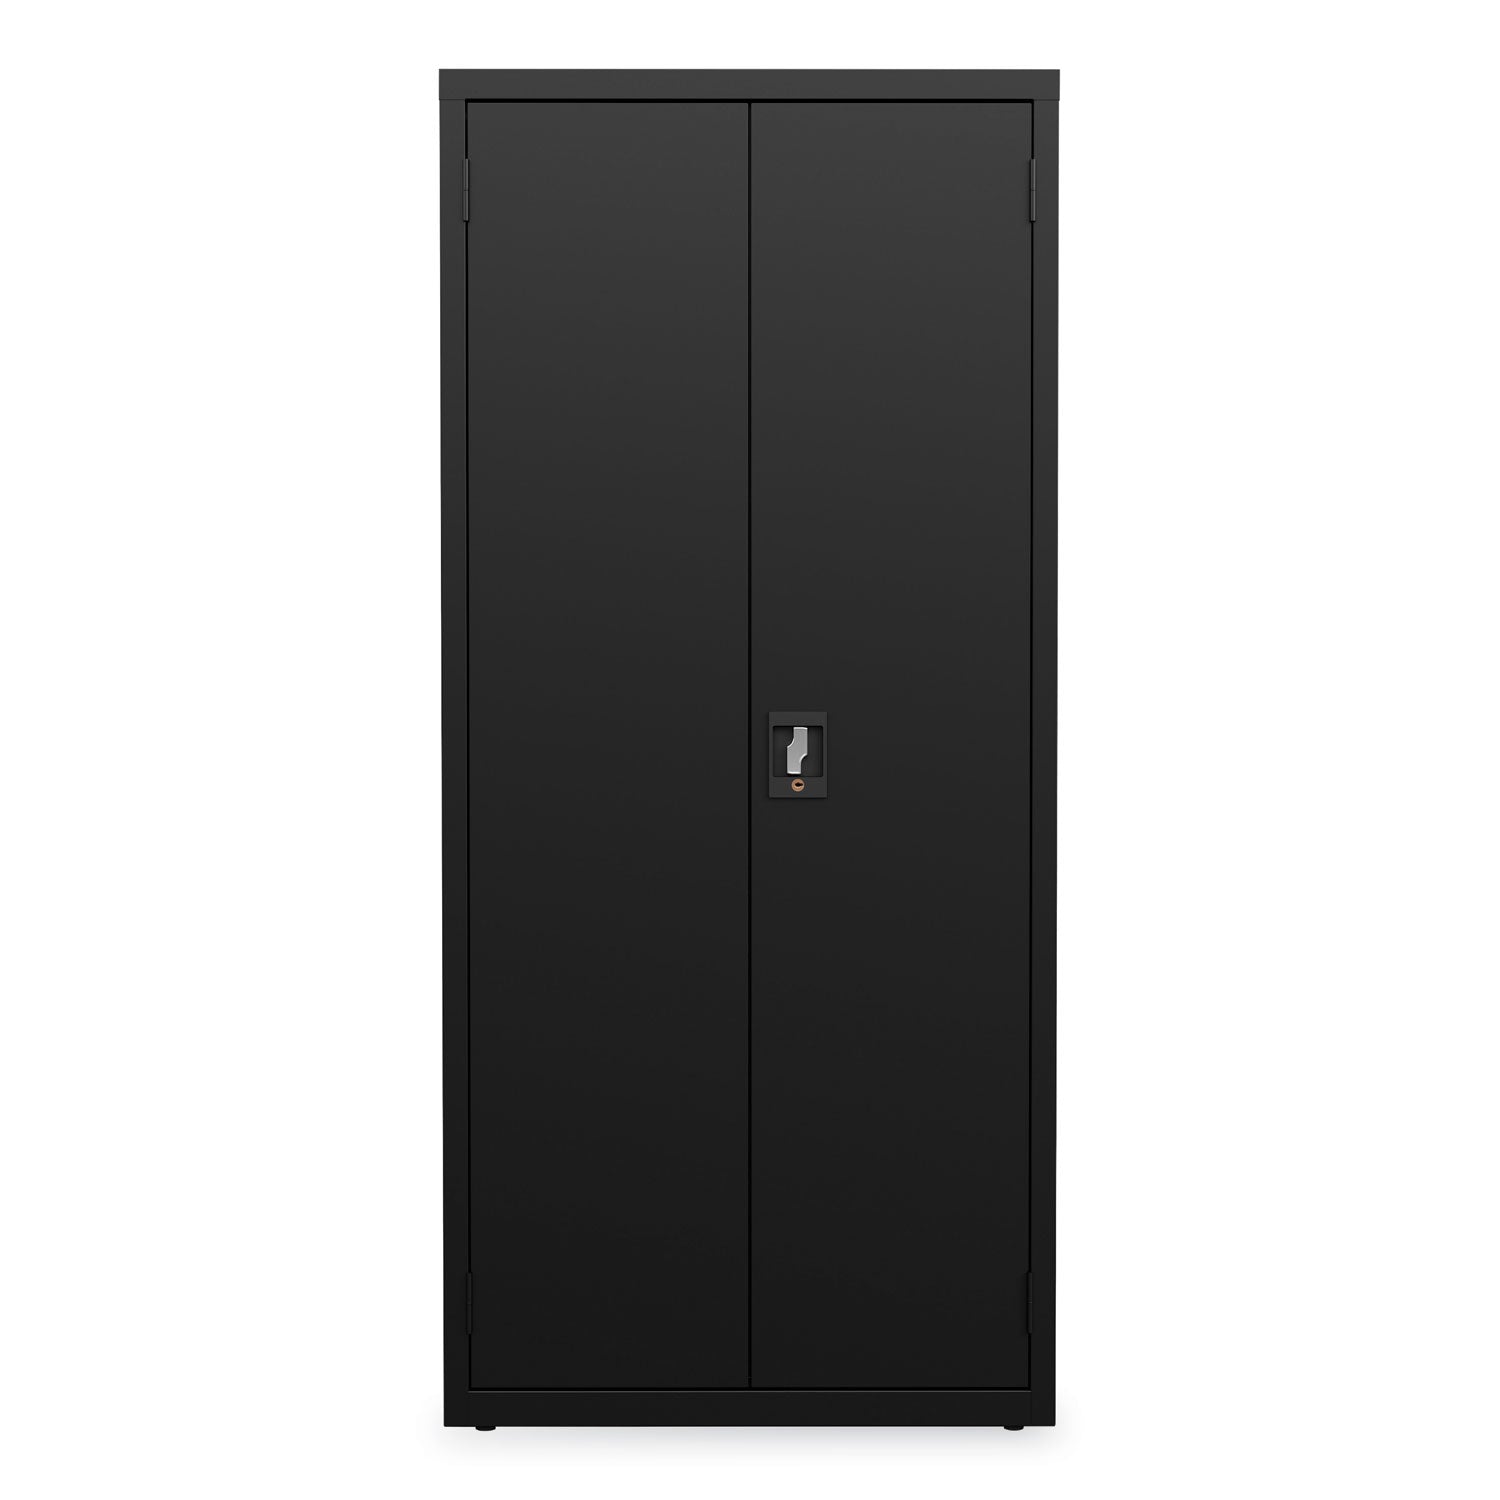 fully-assembled-storage-cabinets-3-shelves-30-x-15-x-66-black_oifcm6615bk - 1